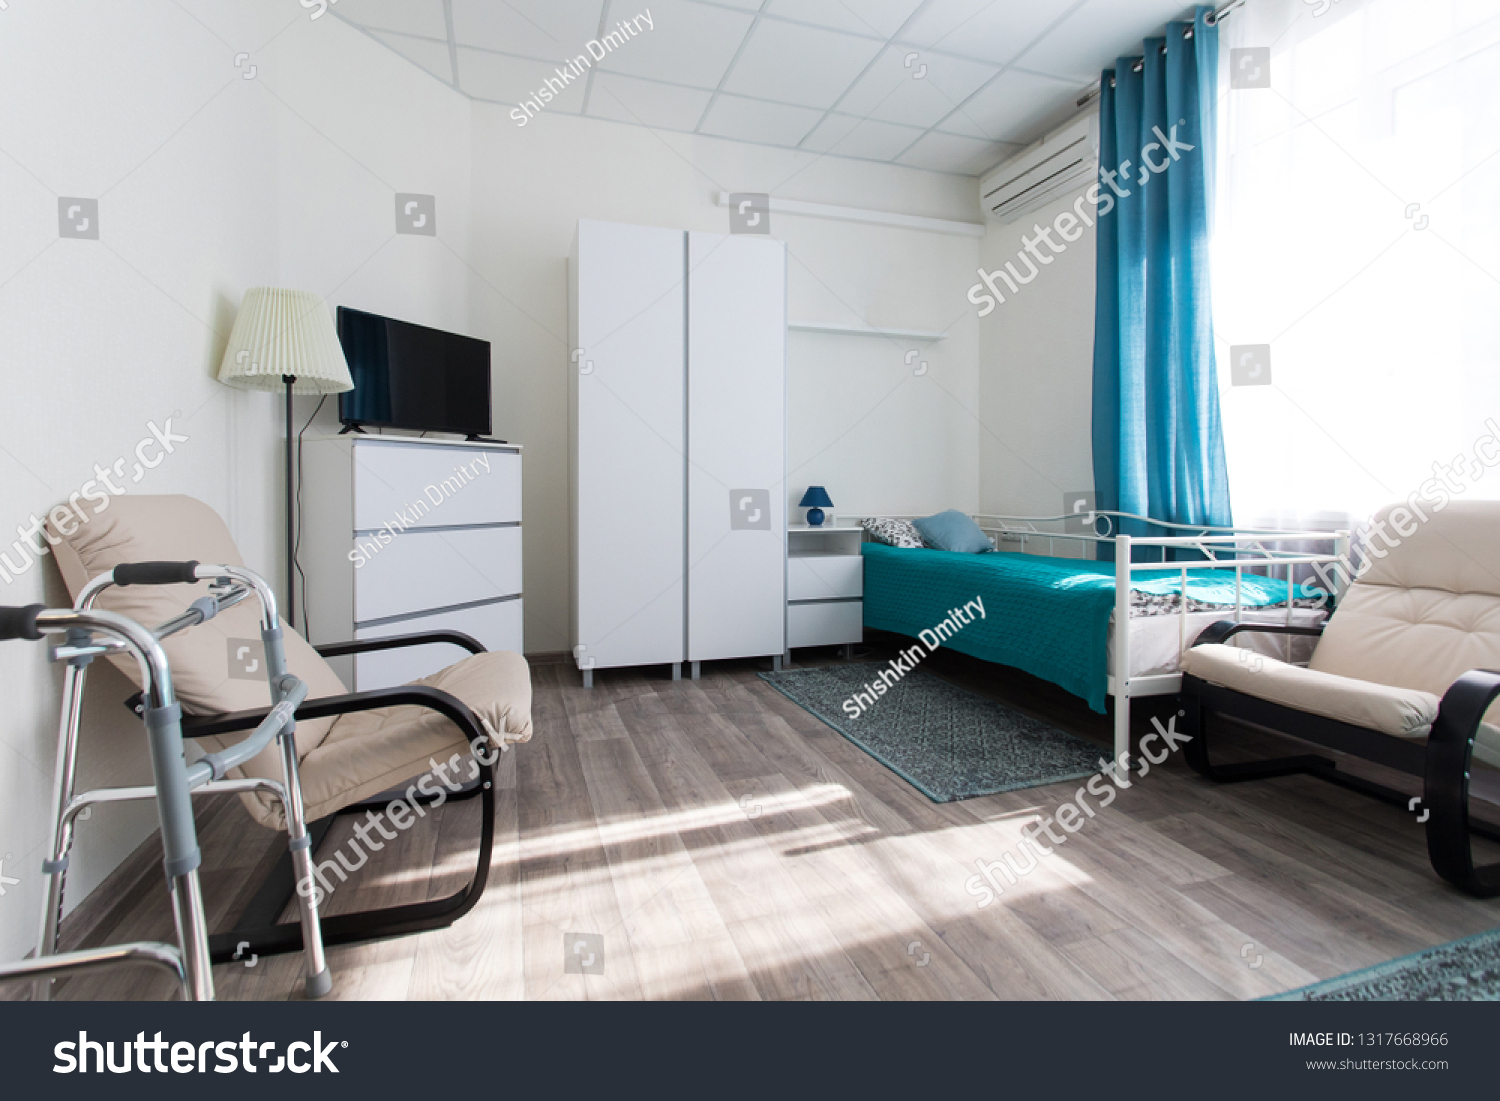 Interior Room Nursing Home Furniture People Stock Photo Edit Now